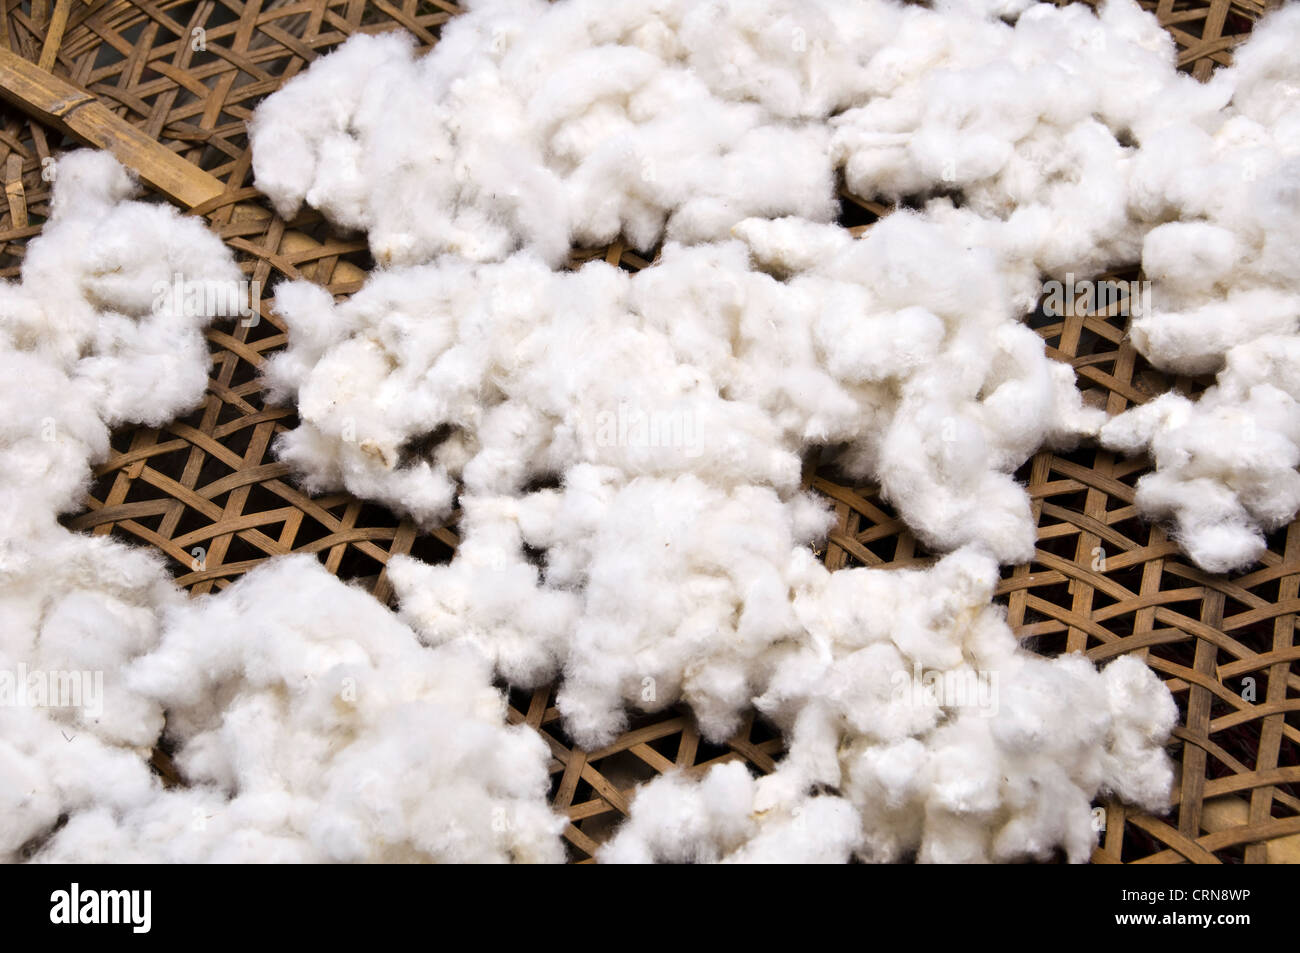 Cotton drying in a basket, Guizhou province - China Stock Photo